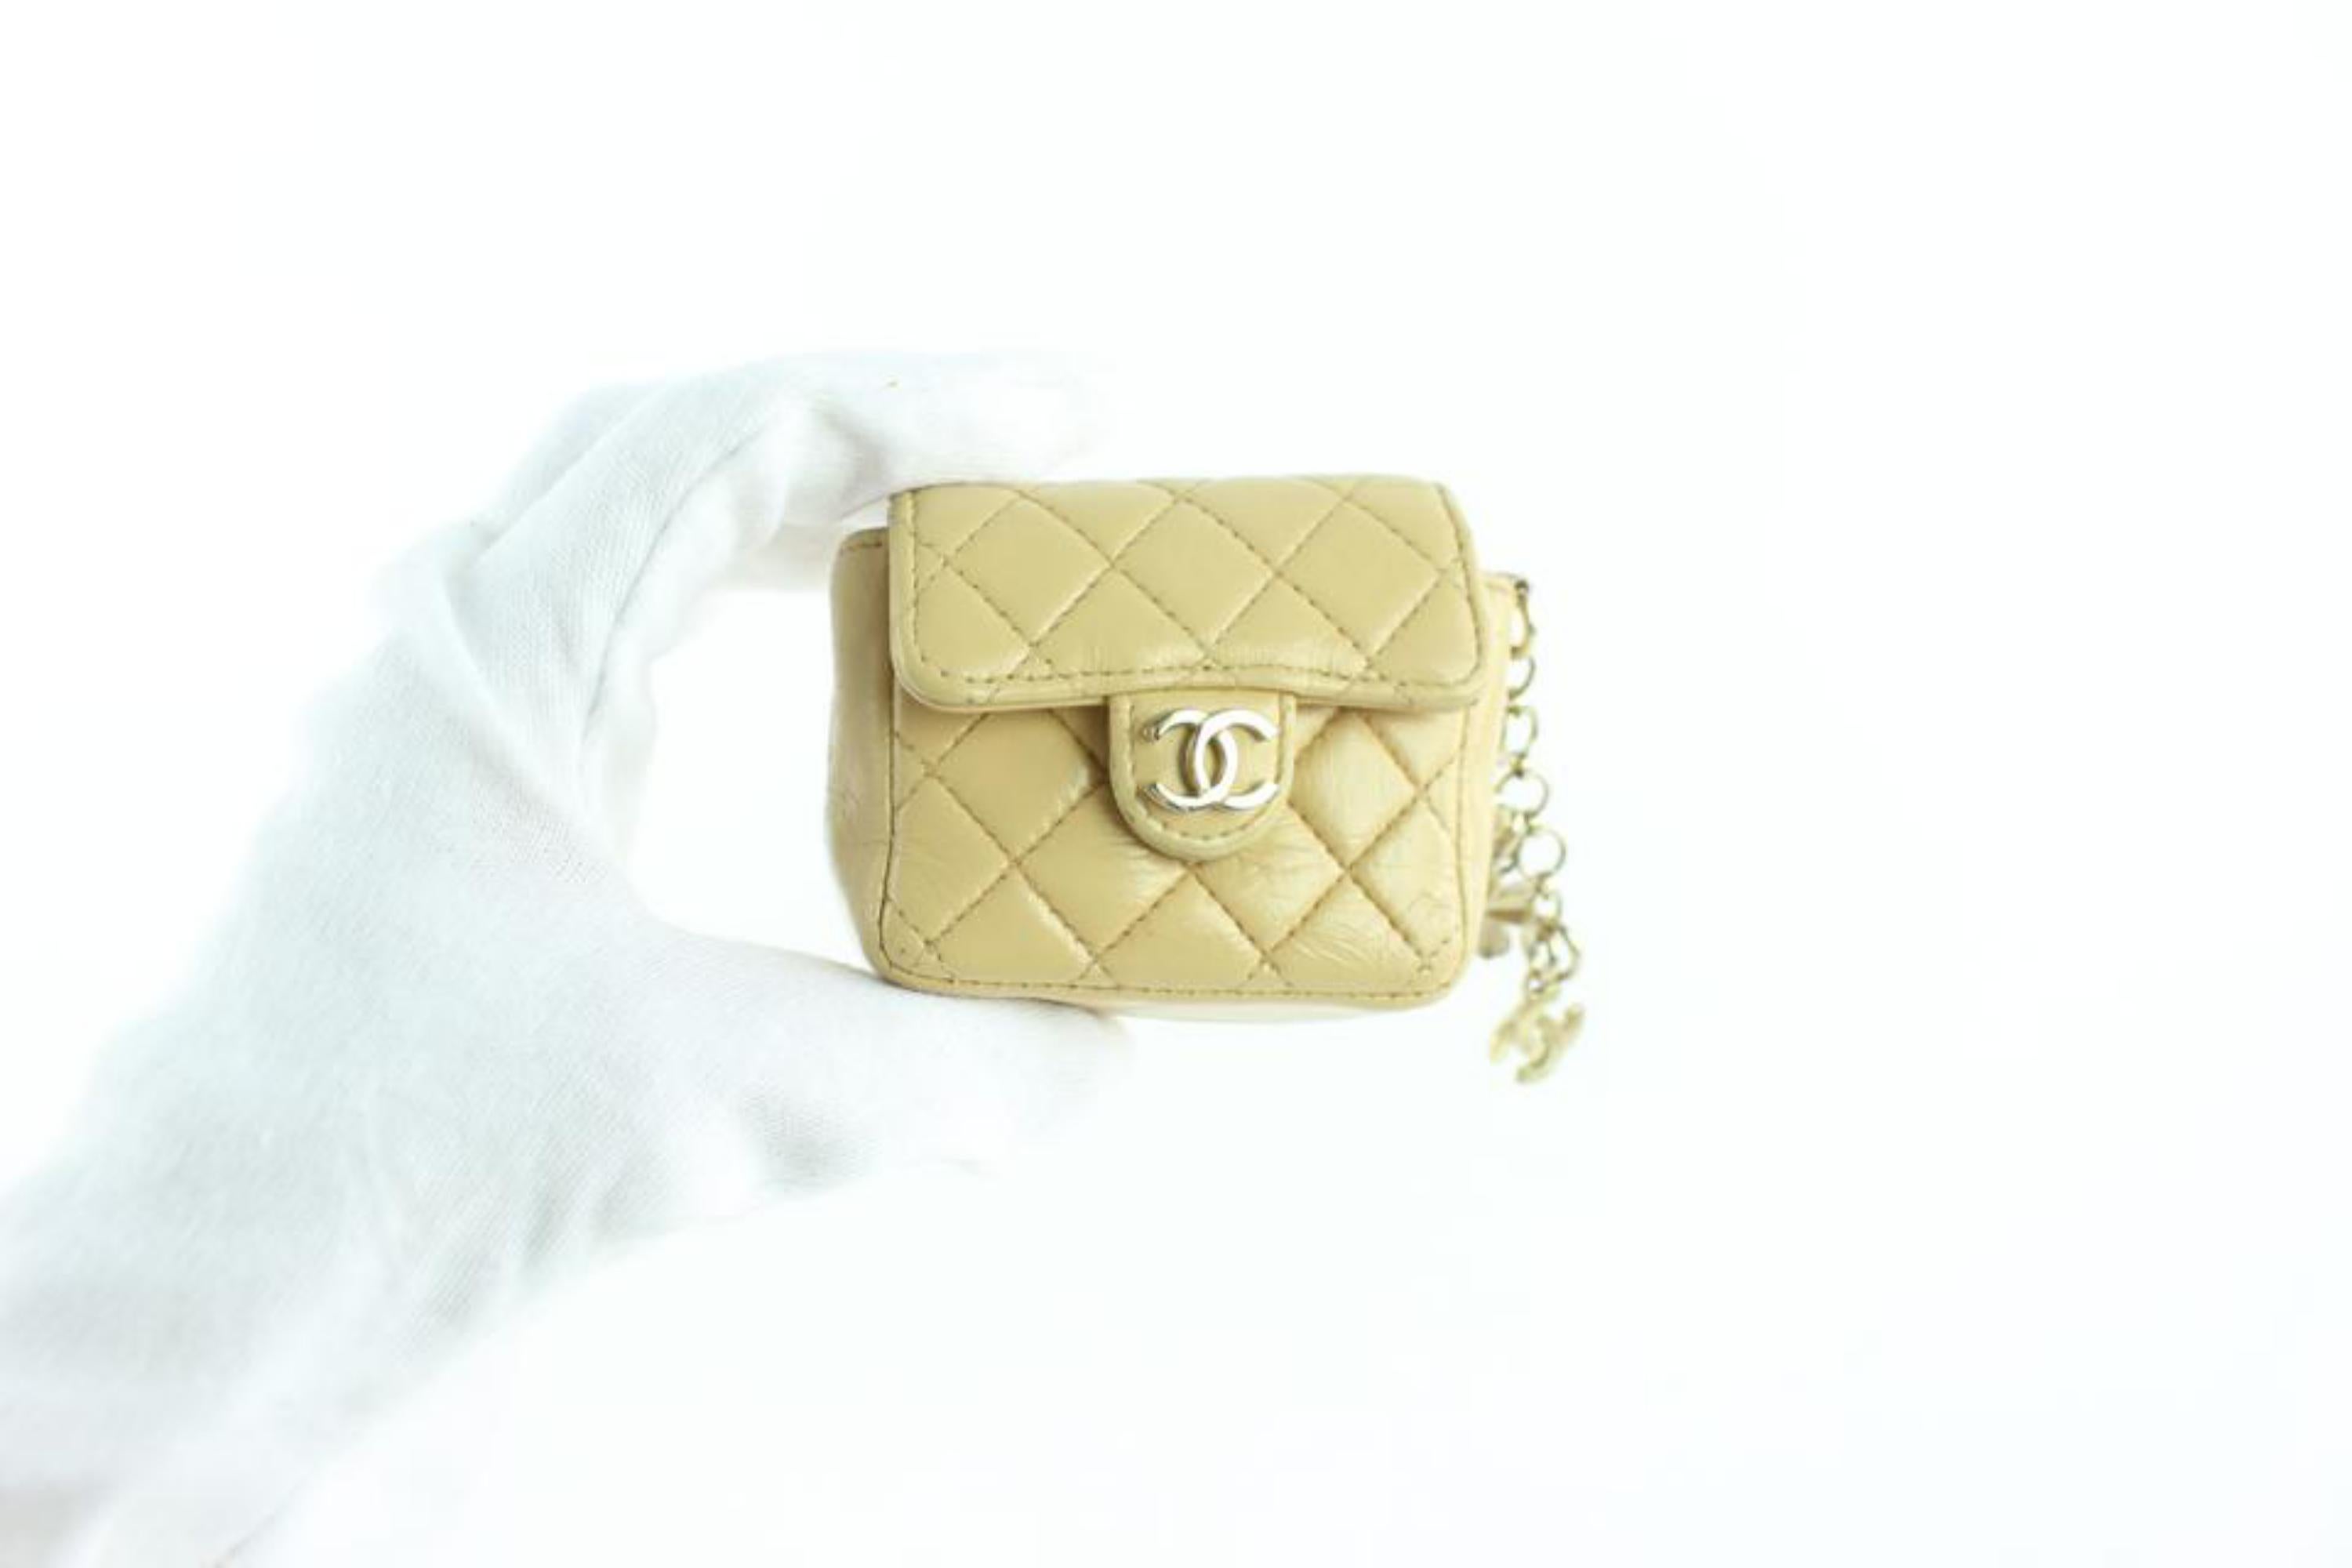 Chanel Chain Belt Fanny Pack Waist Pouch 227070 Beige Leather Cross Body Bag For Sale 5